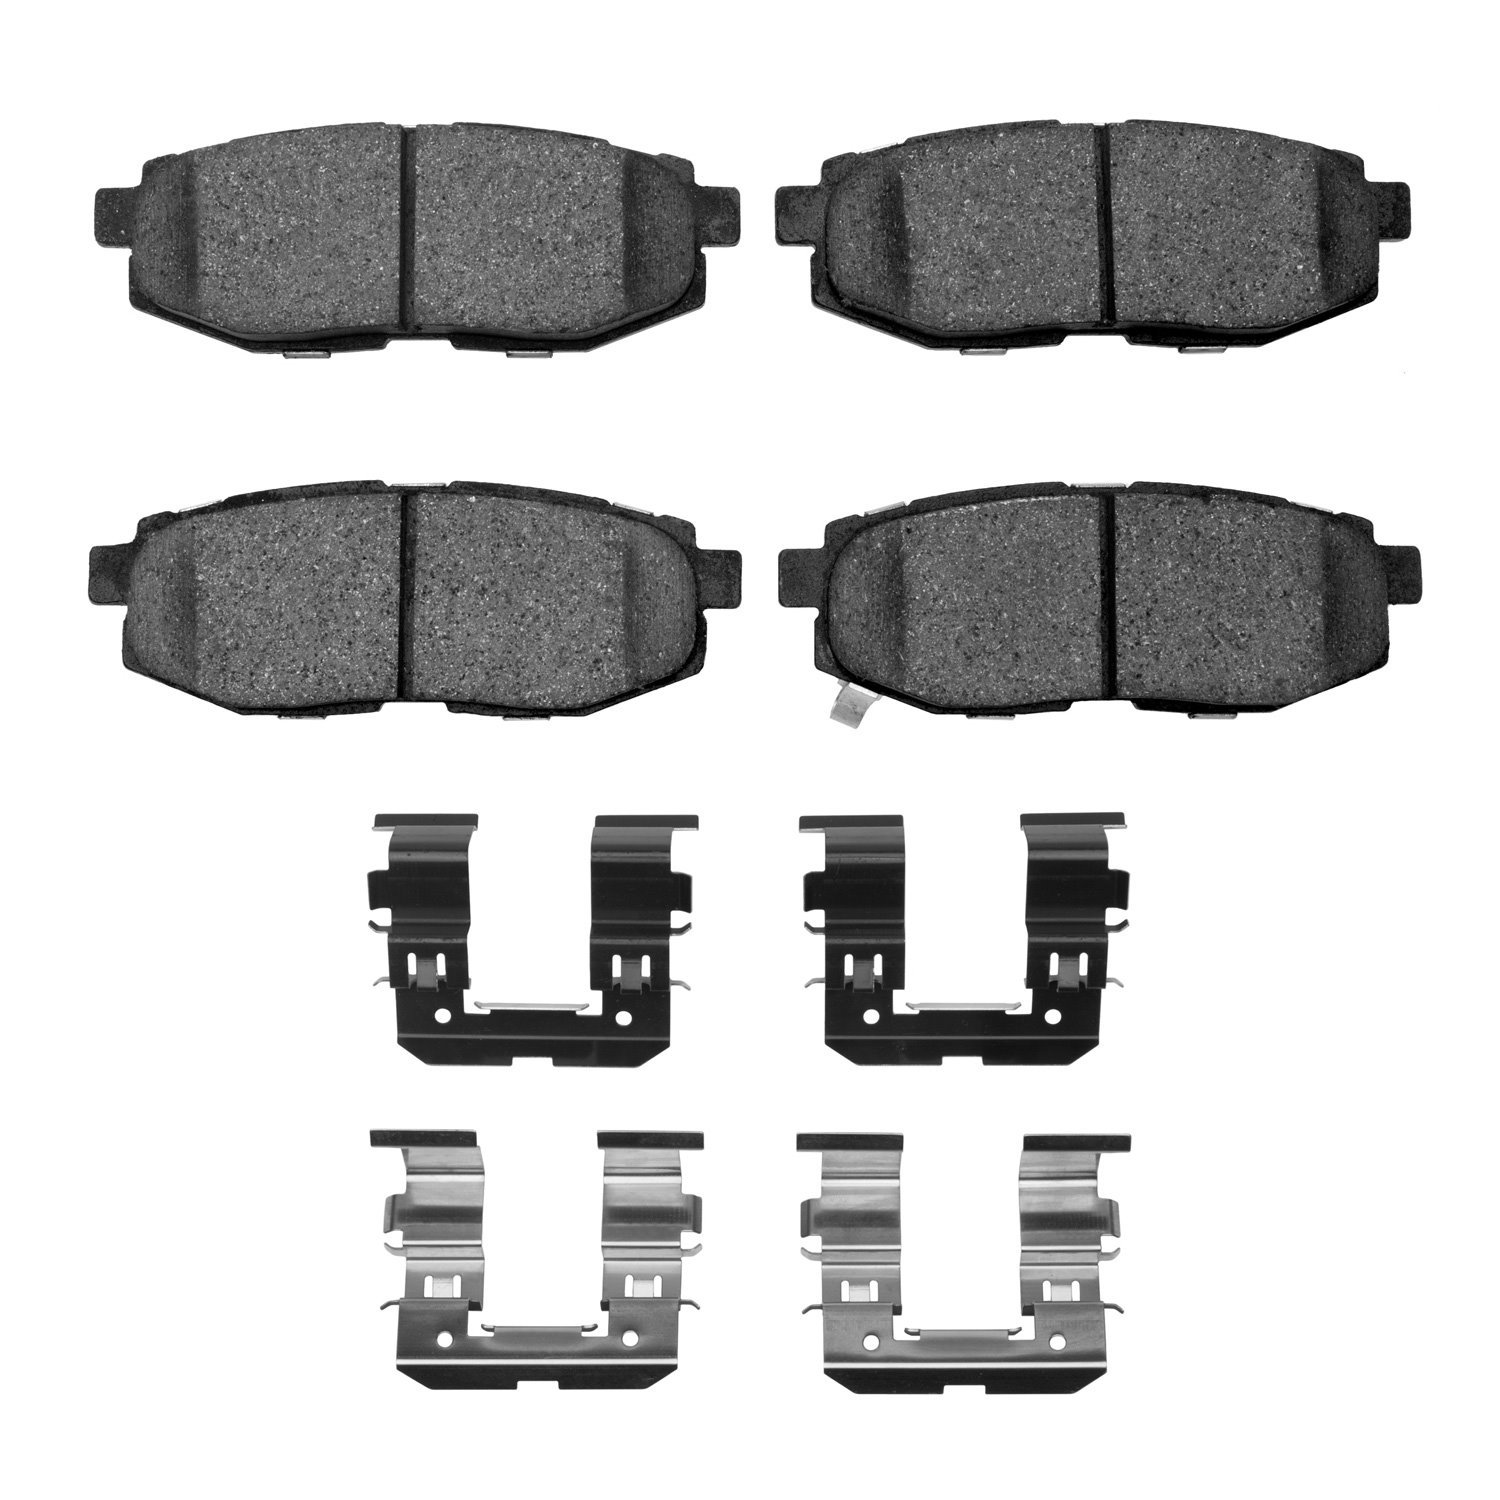 1551-1124-01 5000 Advanced Ceramic Brake Pads & Hardware Kit, Fits Select Multiple Makes/Models, Position: Rear